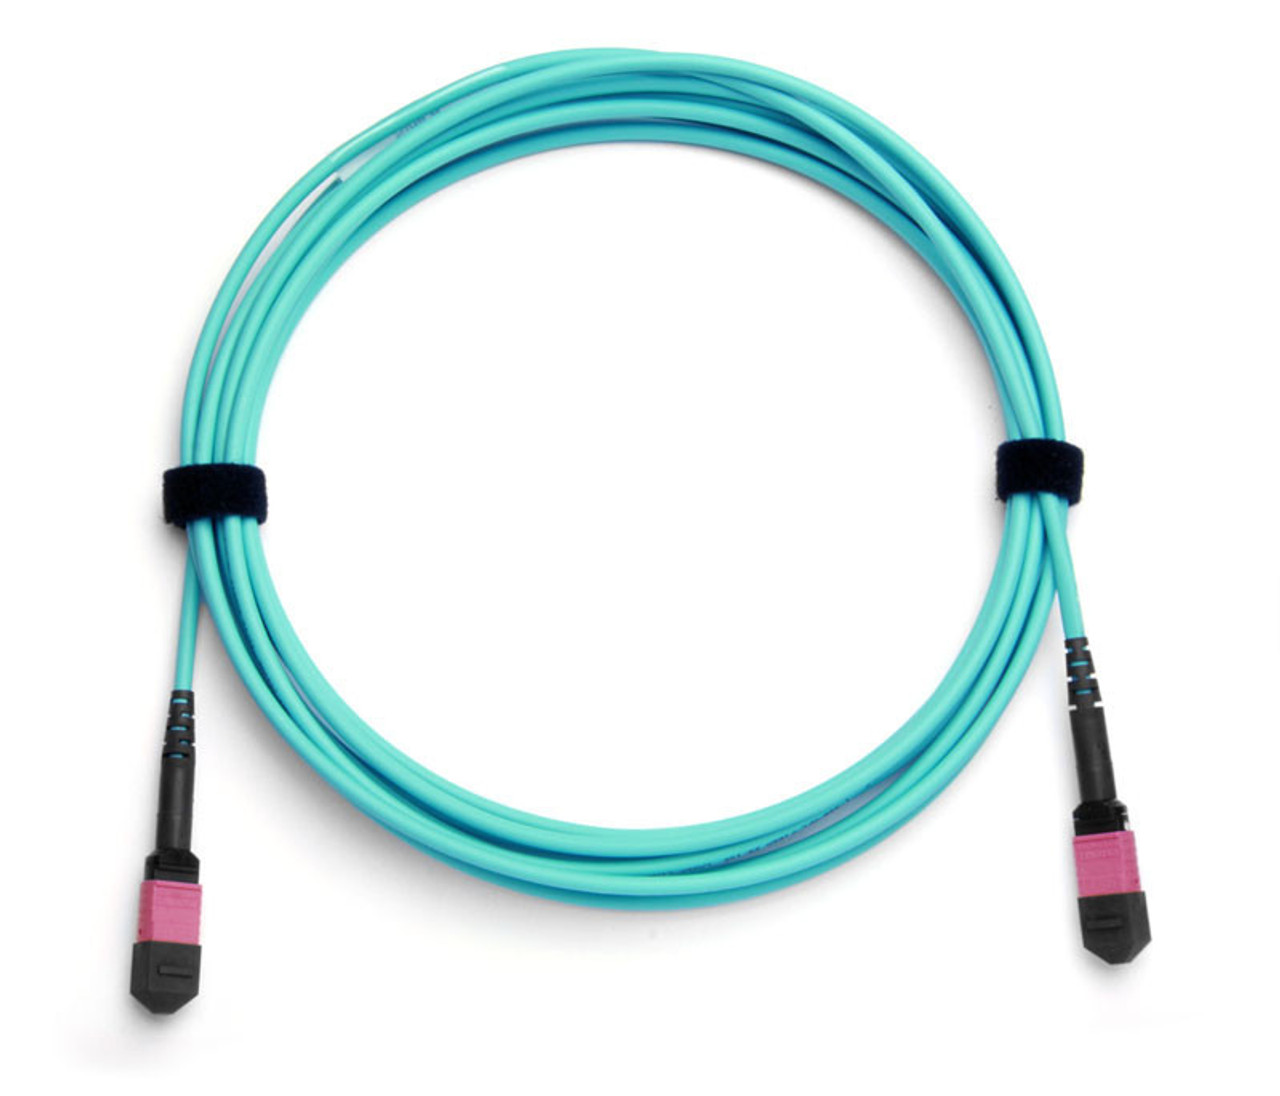 CONFiX™ WS cable protection conduits for cables without connectors